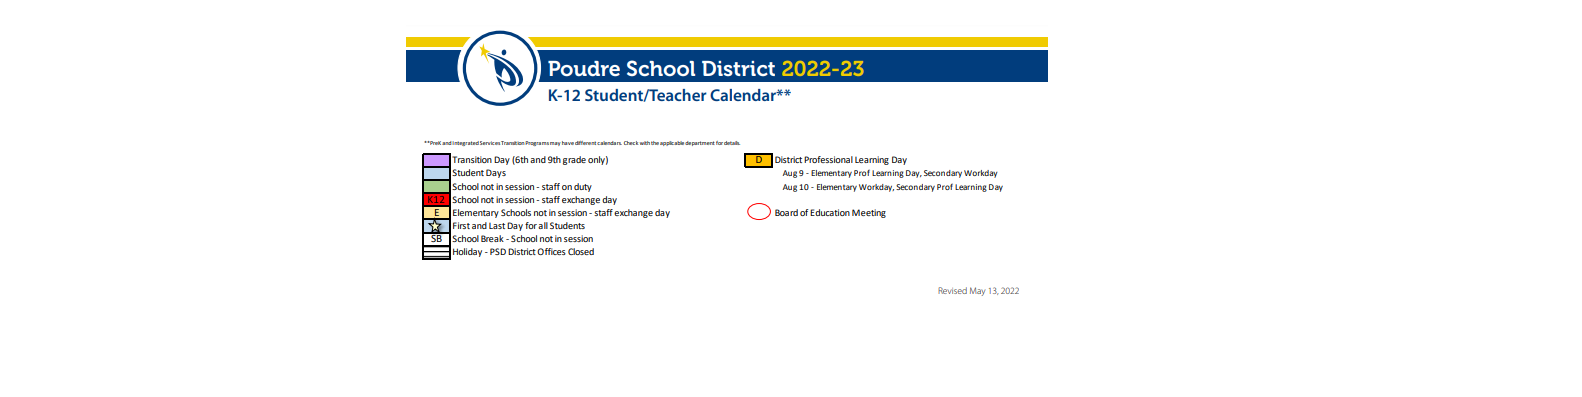 District School Academic Calendar Key for Tavelli Elementary School